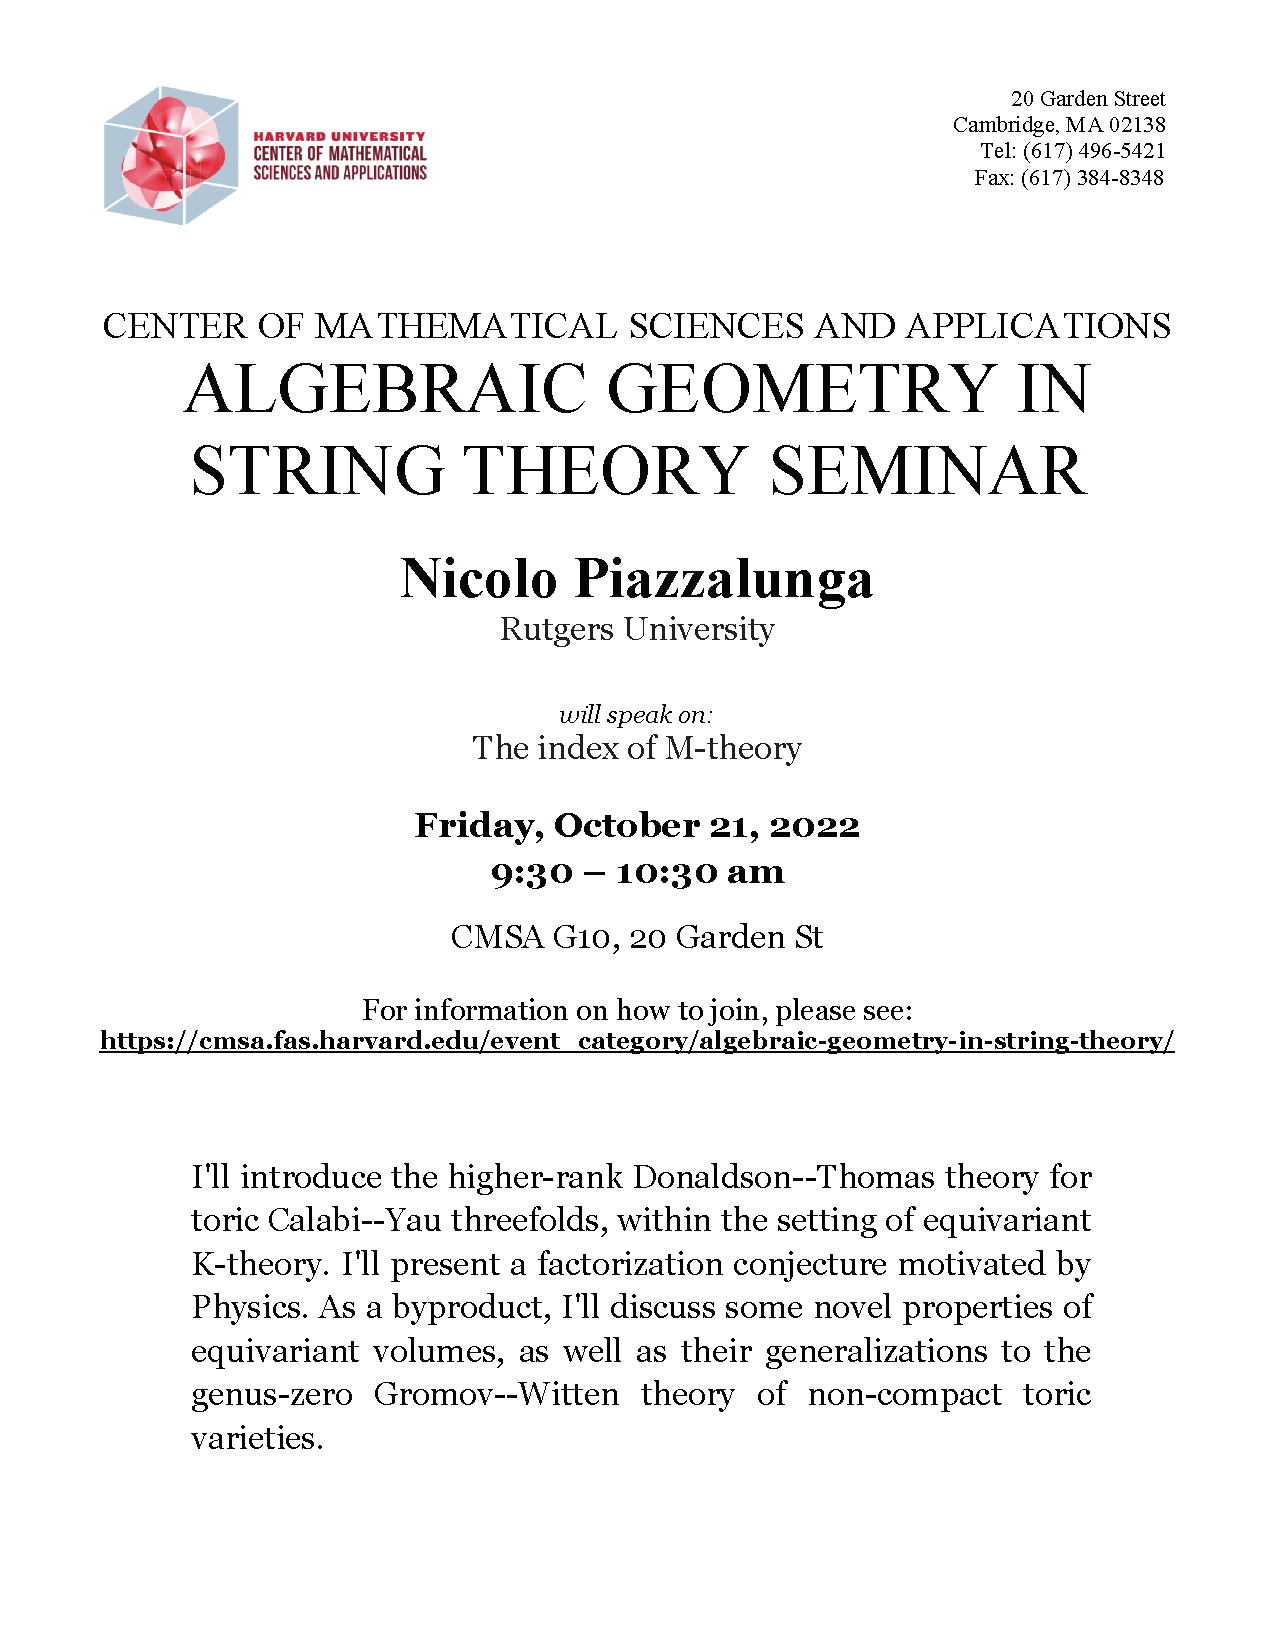 CMSA Algebraic Geometry in String Theory 10.21.2022